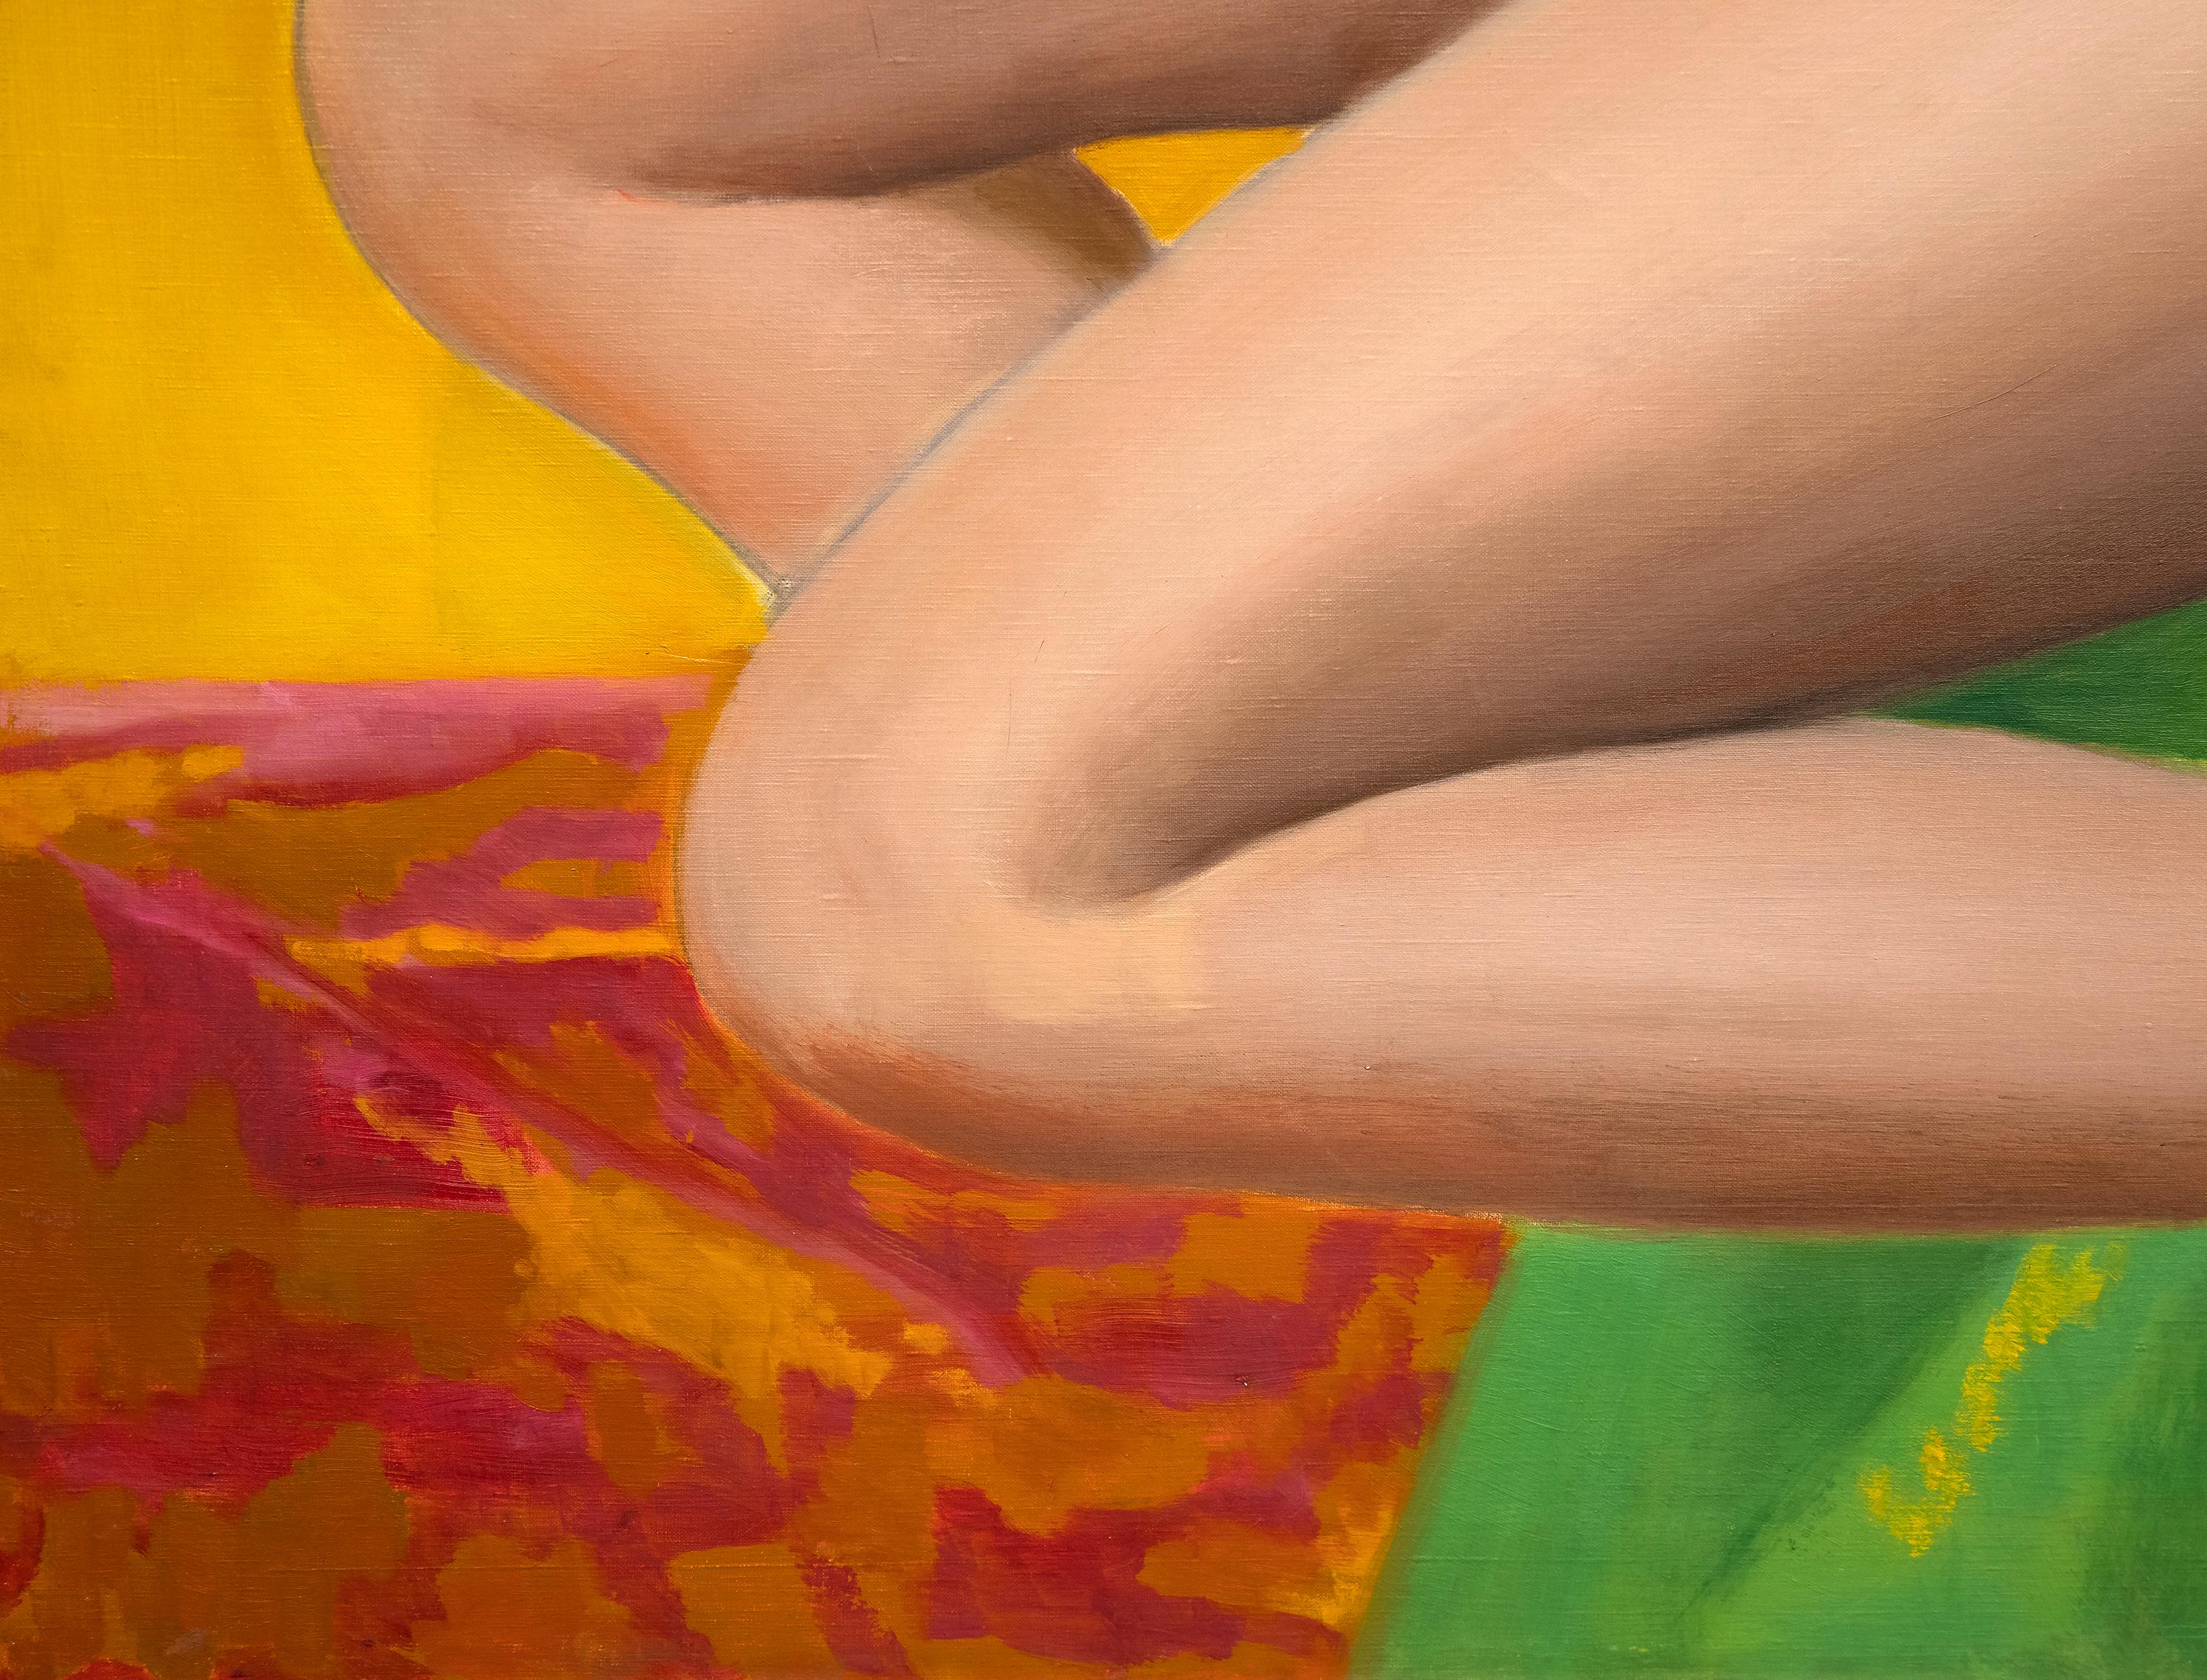 Reclining Nude - Yellow Figurative Painting by Joseph Stella